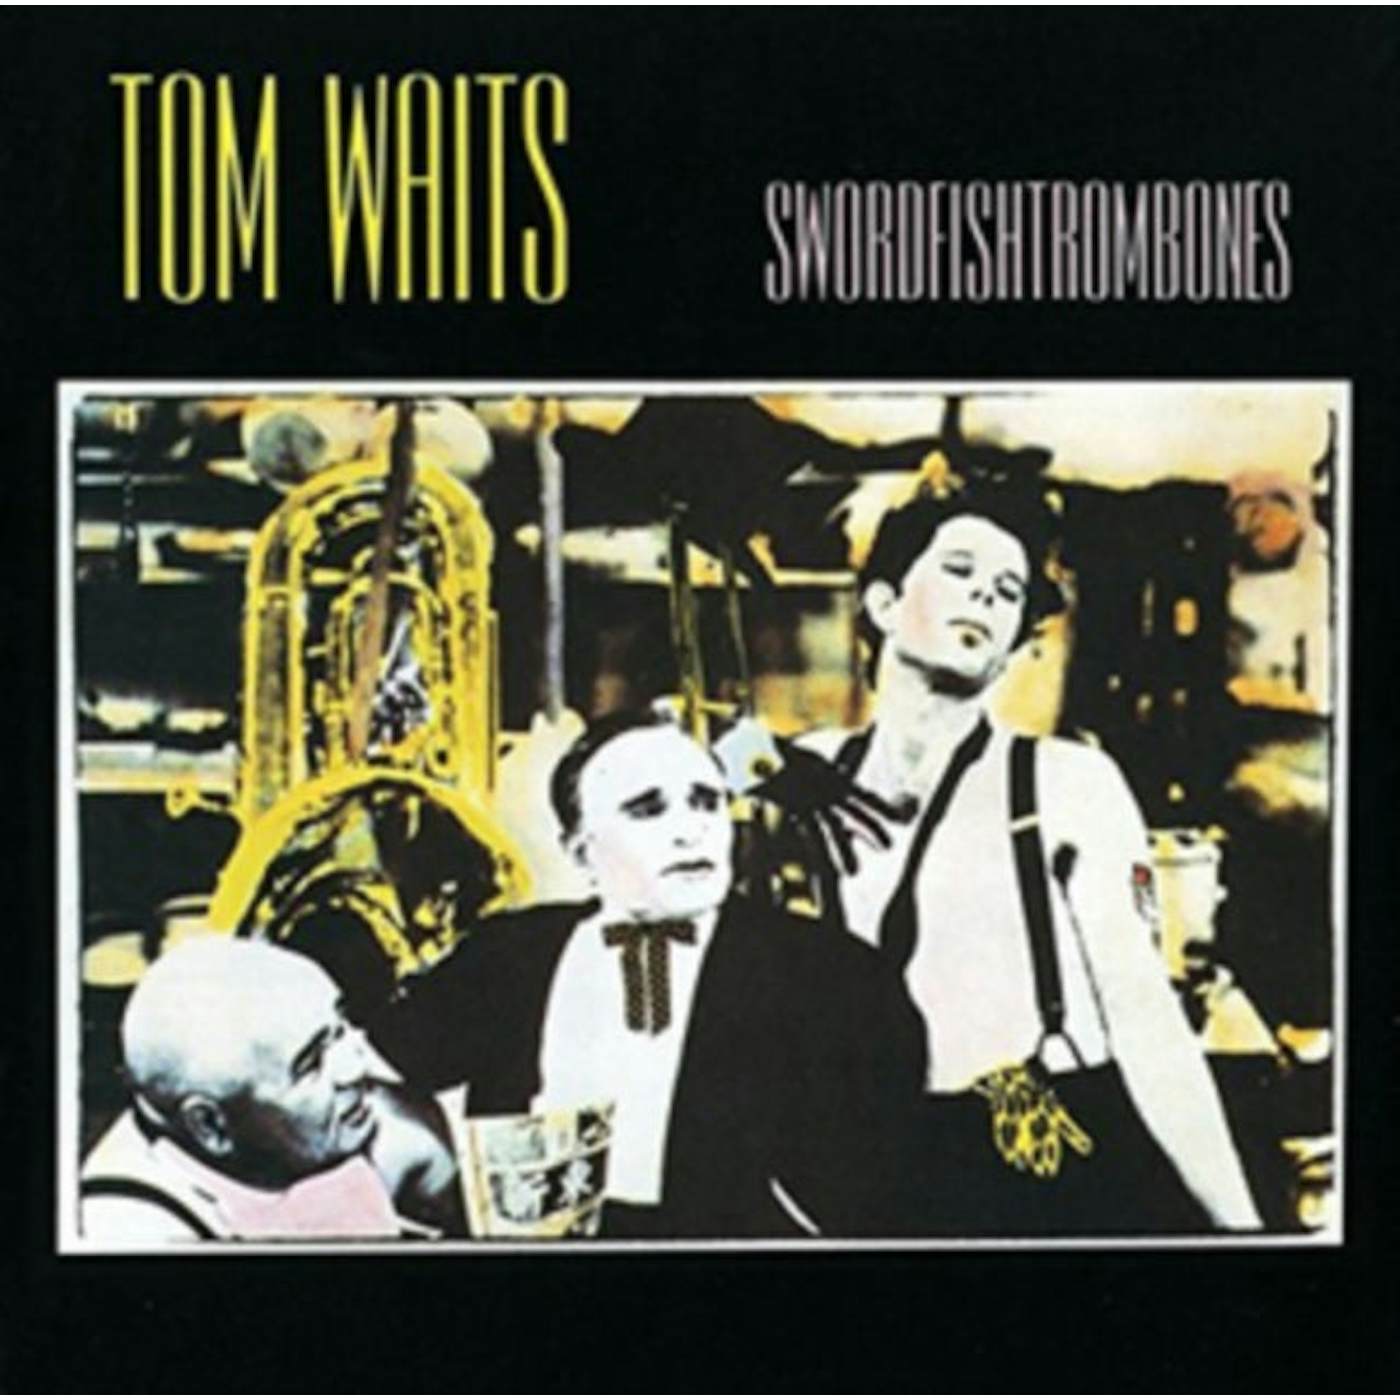 Tom Waits LP Vinyl Record - Swordfishtrombones